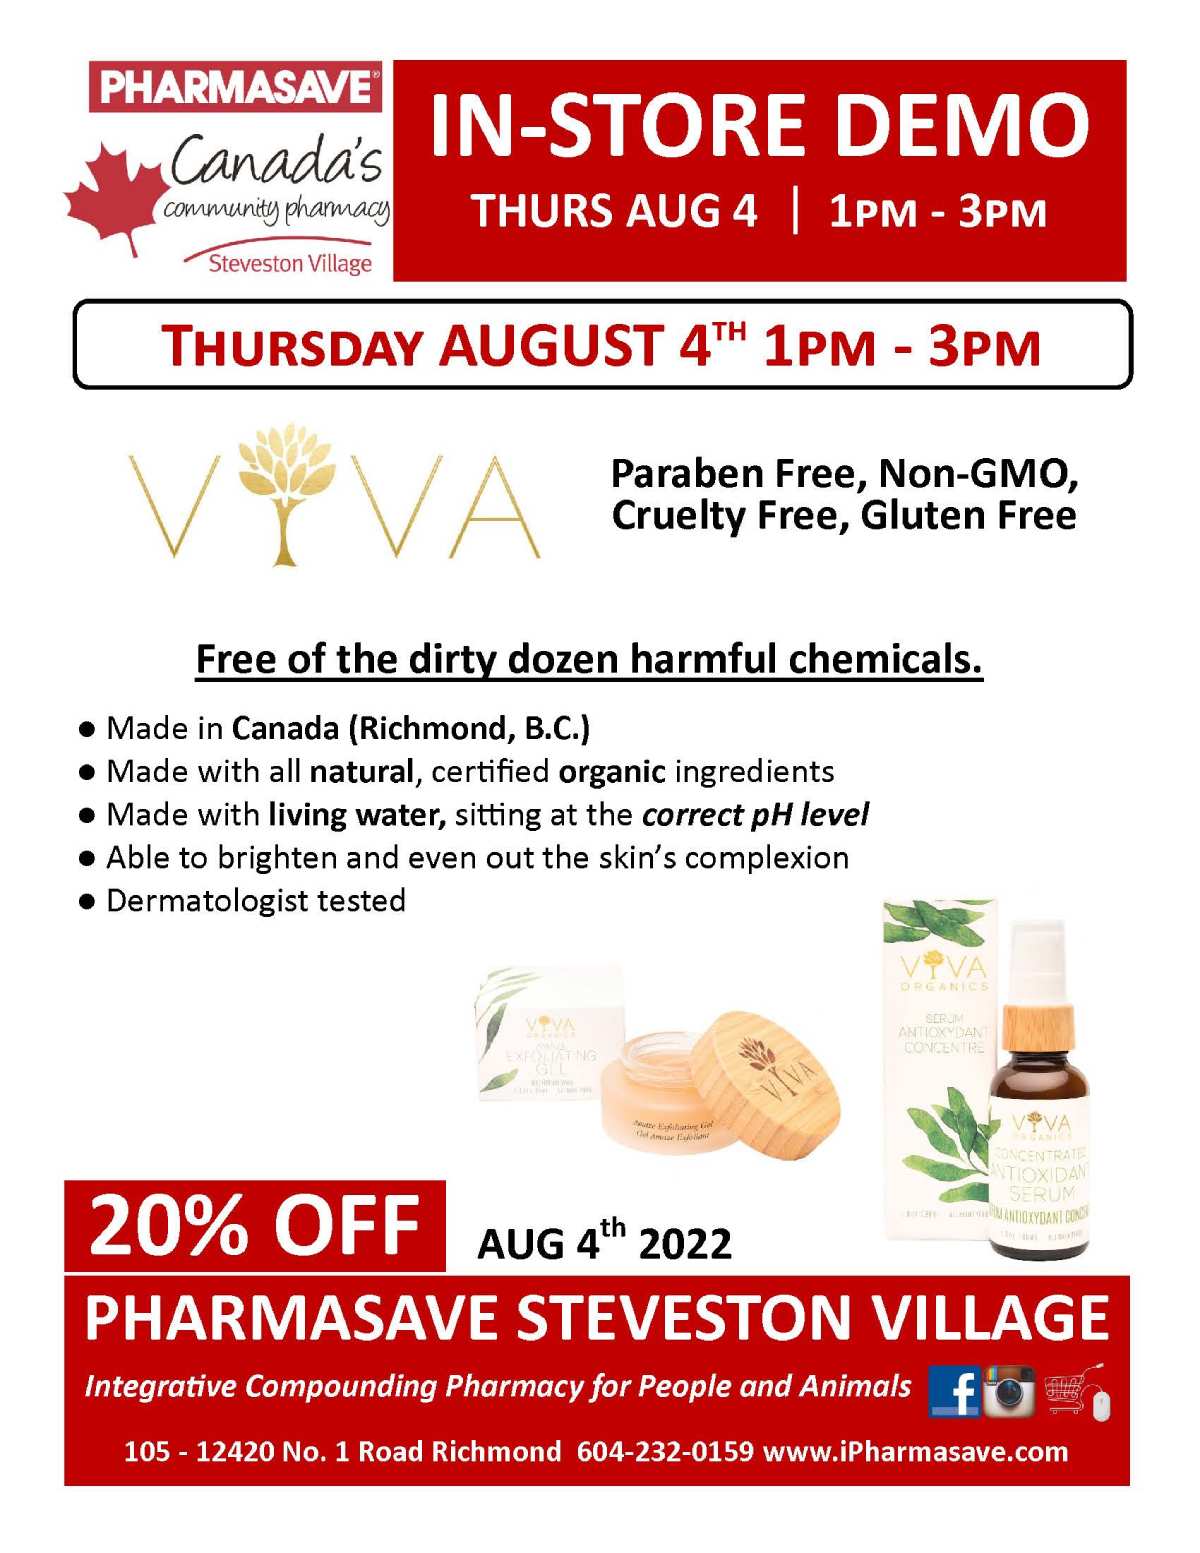 Viva Organic Skincare in-store demo Thursday August 4th 1pm - 3pm